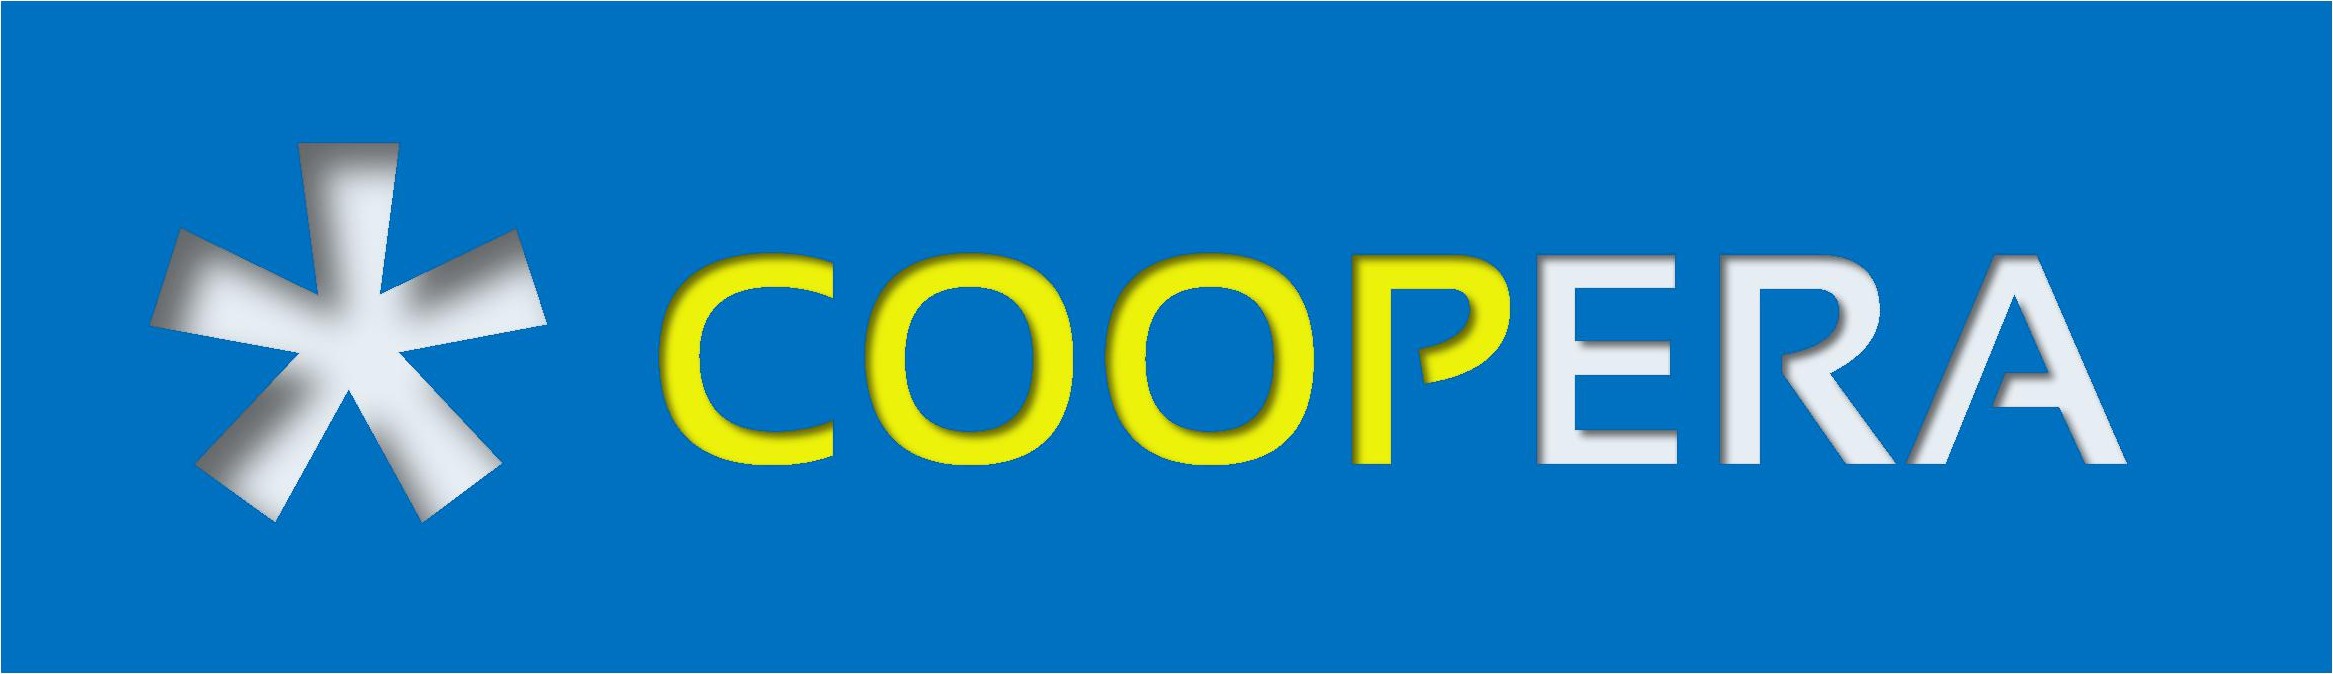 coopera-logo